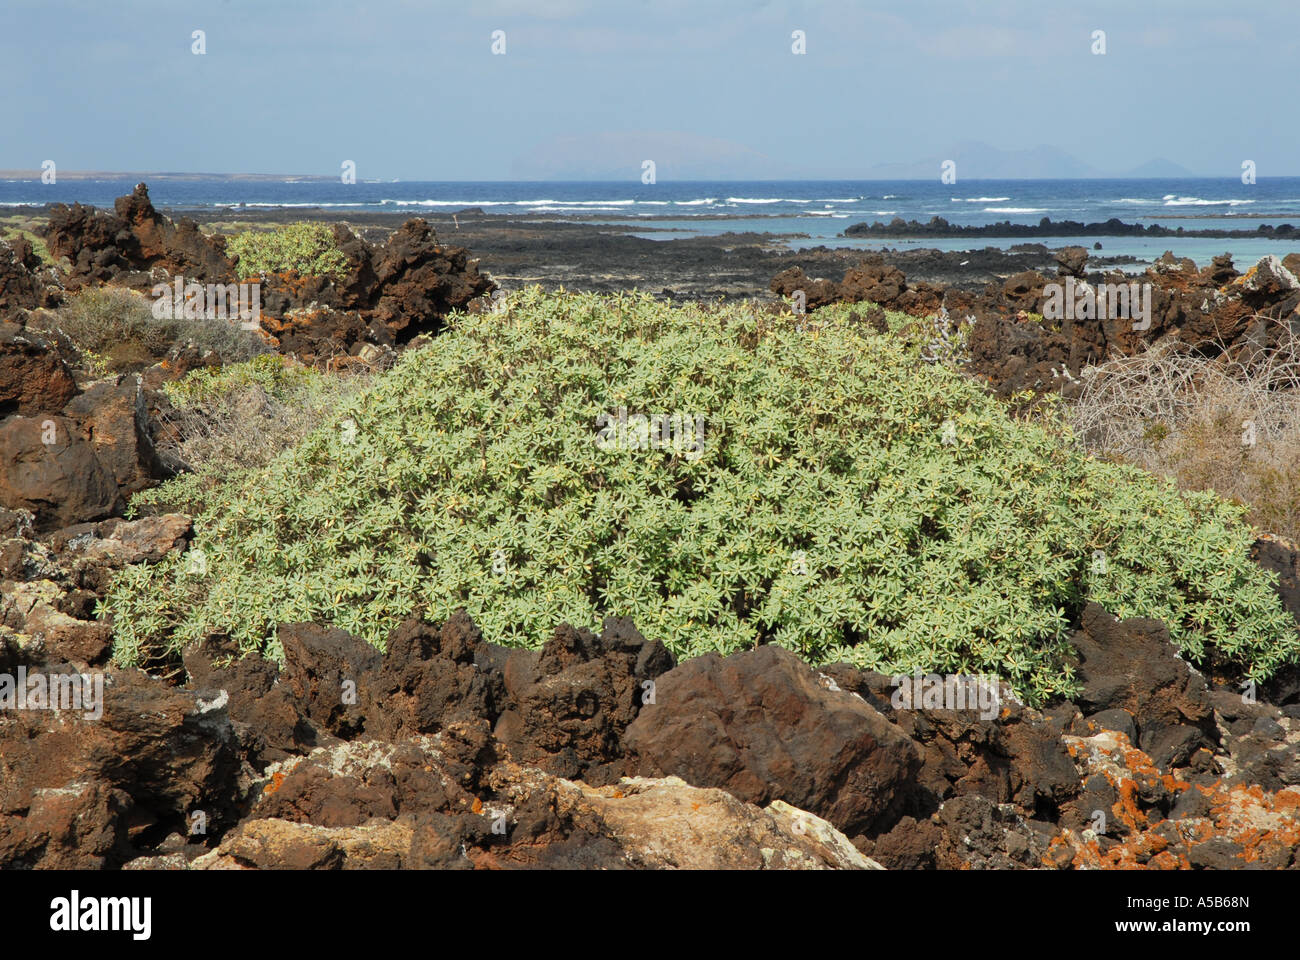 A Euphorbia bush growing in volcanic rock on Lanzarote Island coast Stock Photo